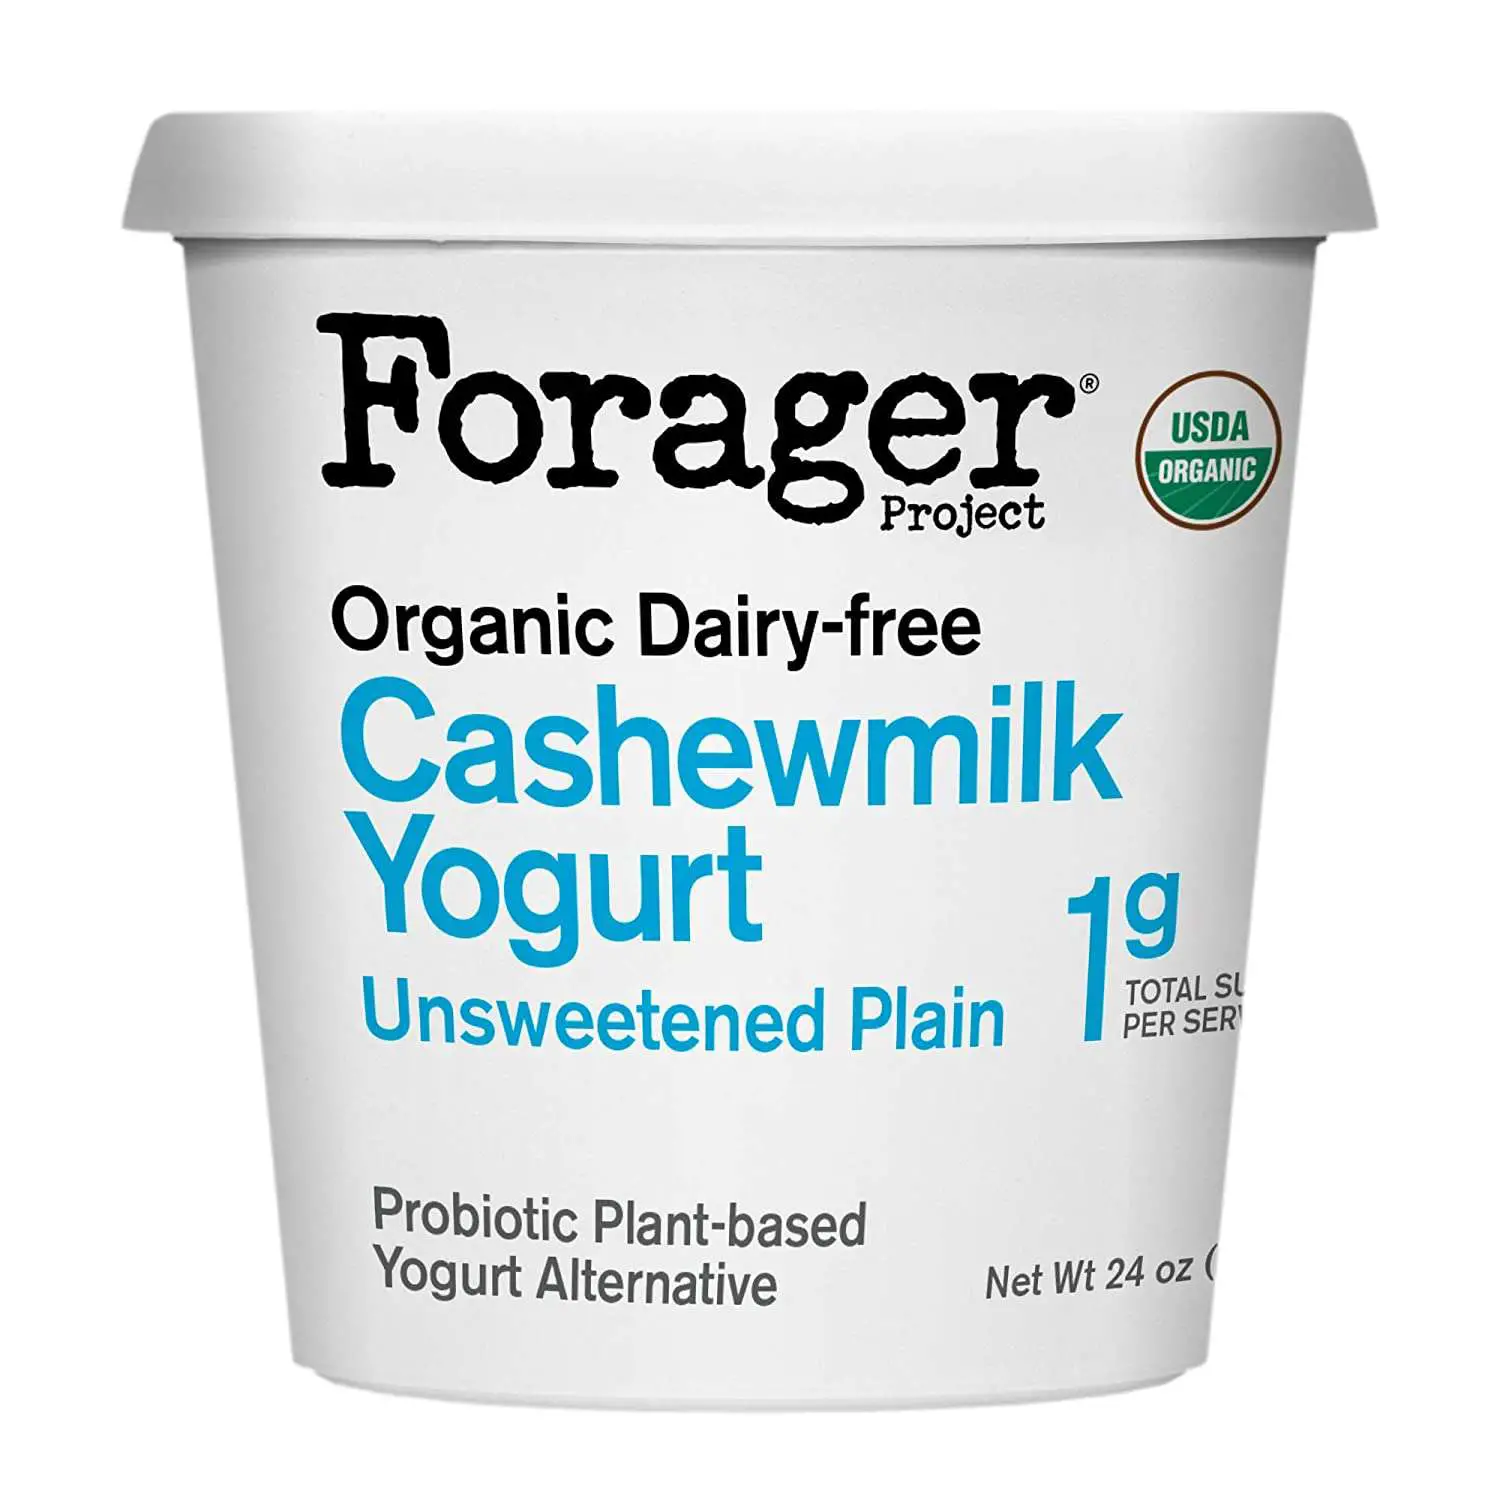 5 Best Vegan Probiotic Yogurts â The Vegan